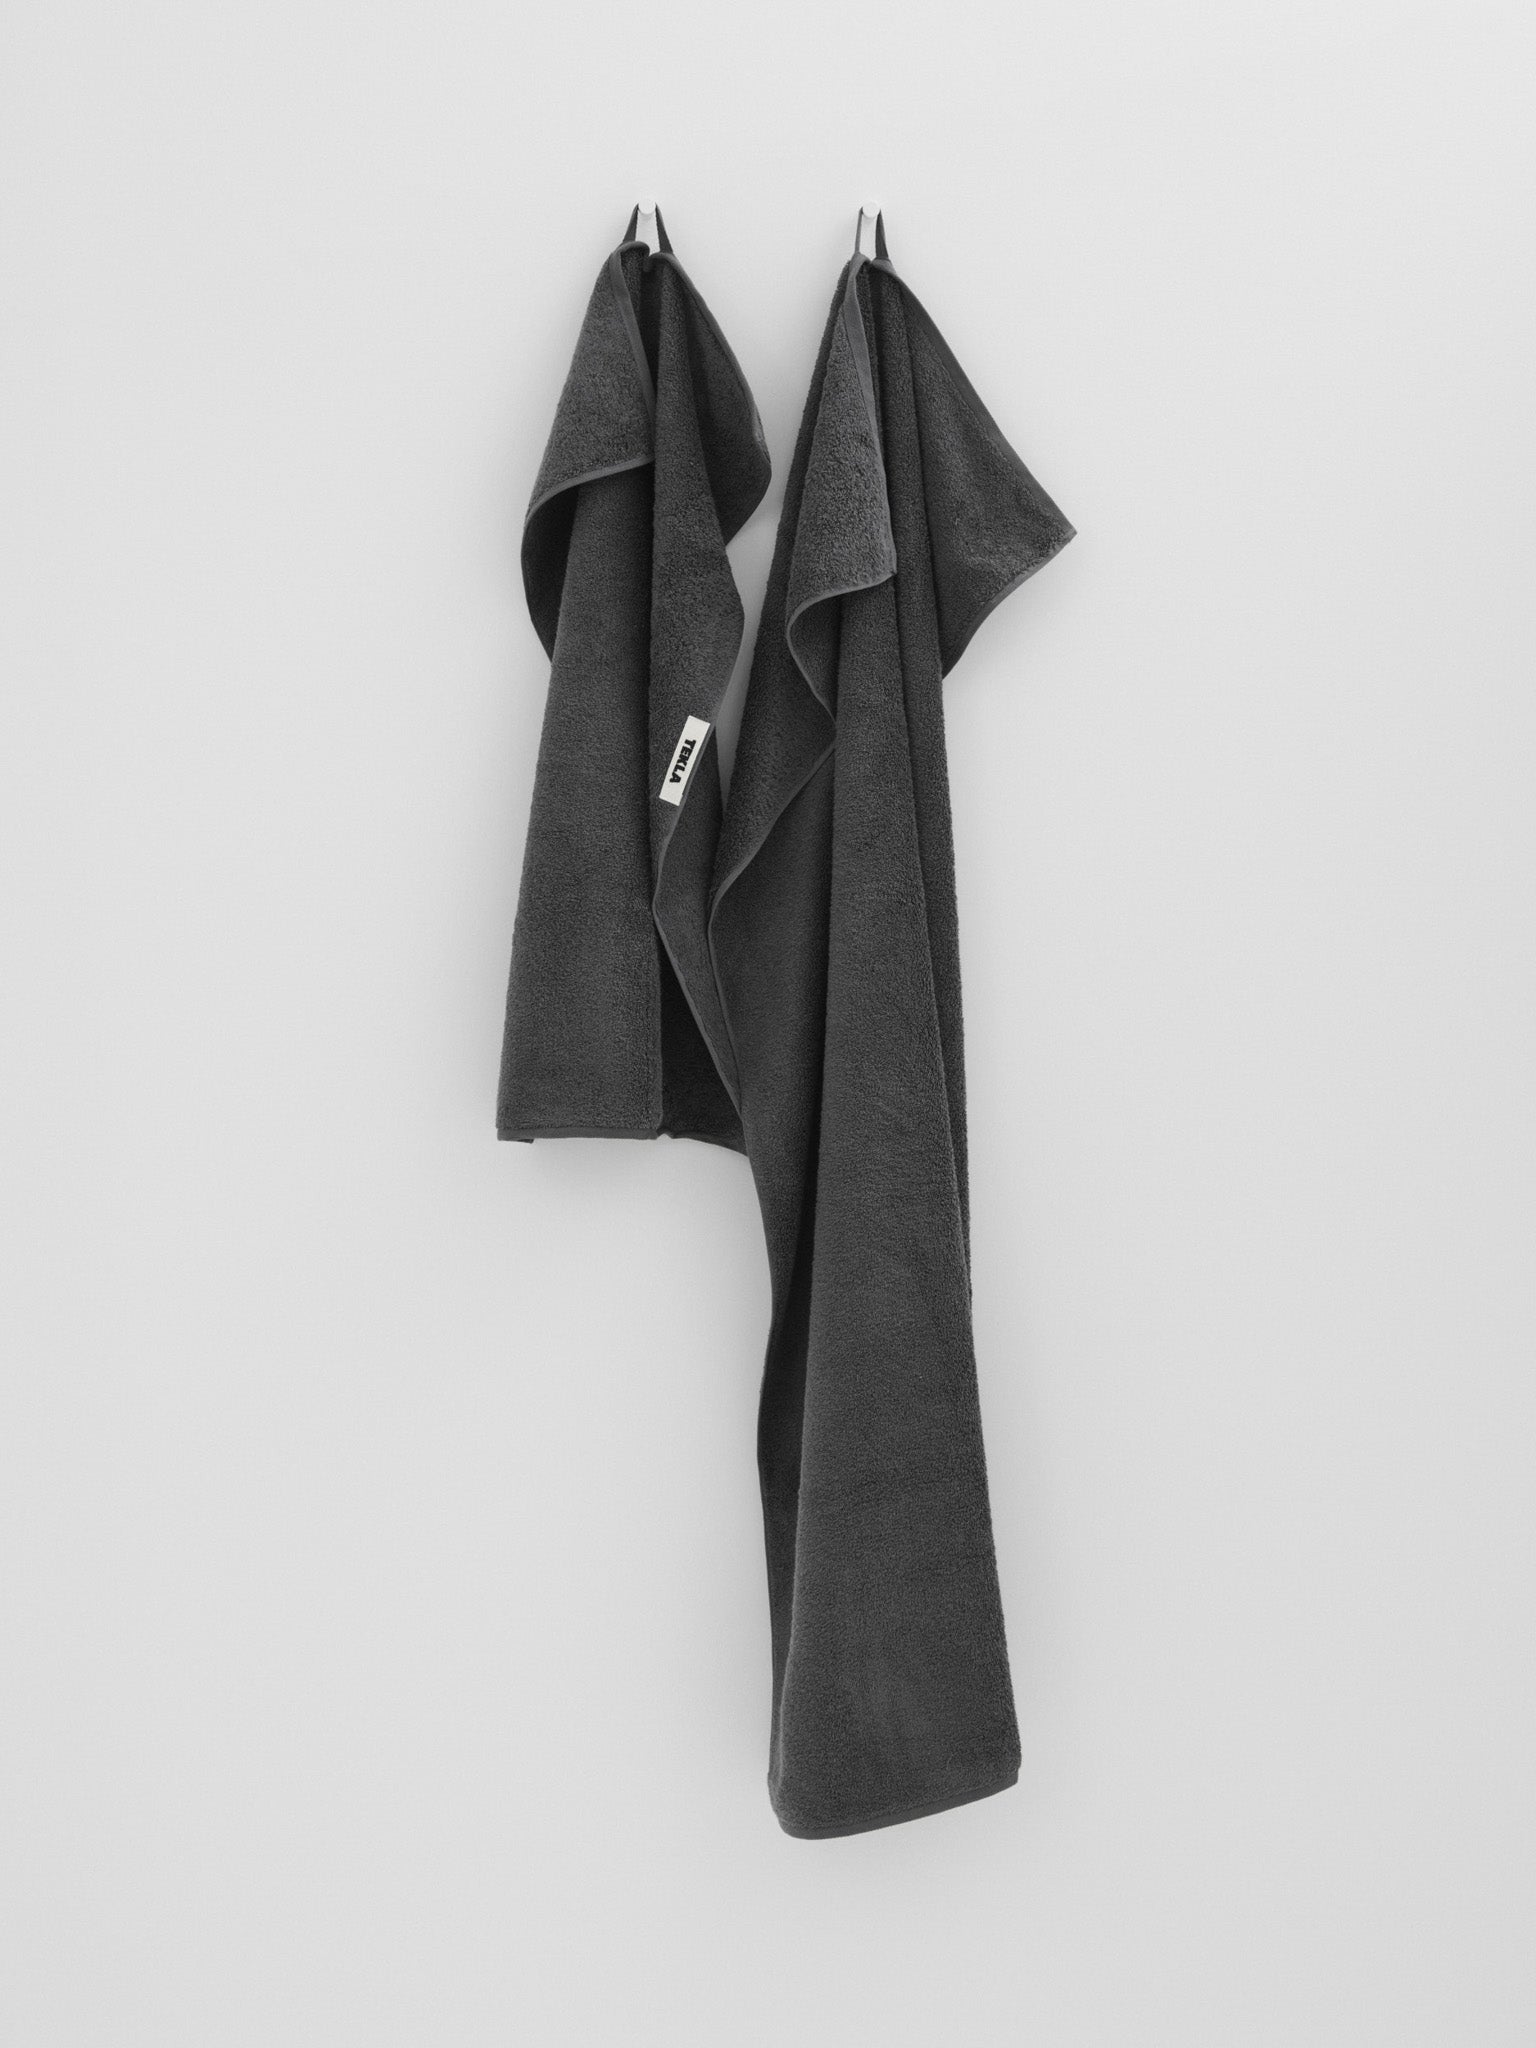 Bath Towel in Charcoal Grey